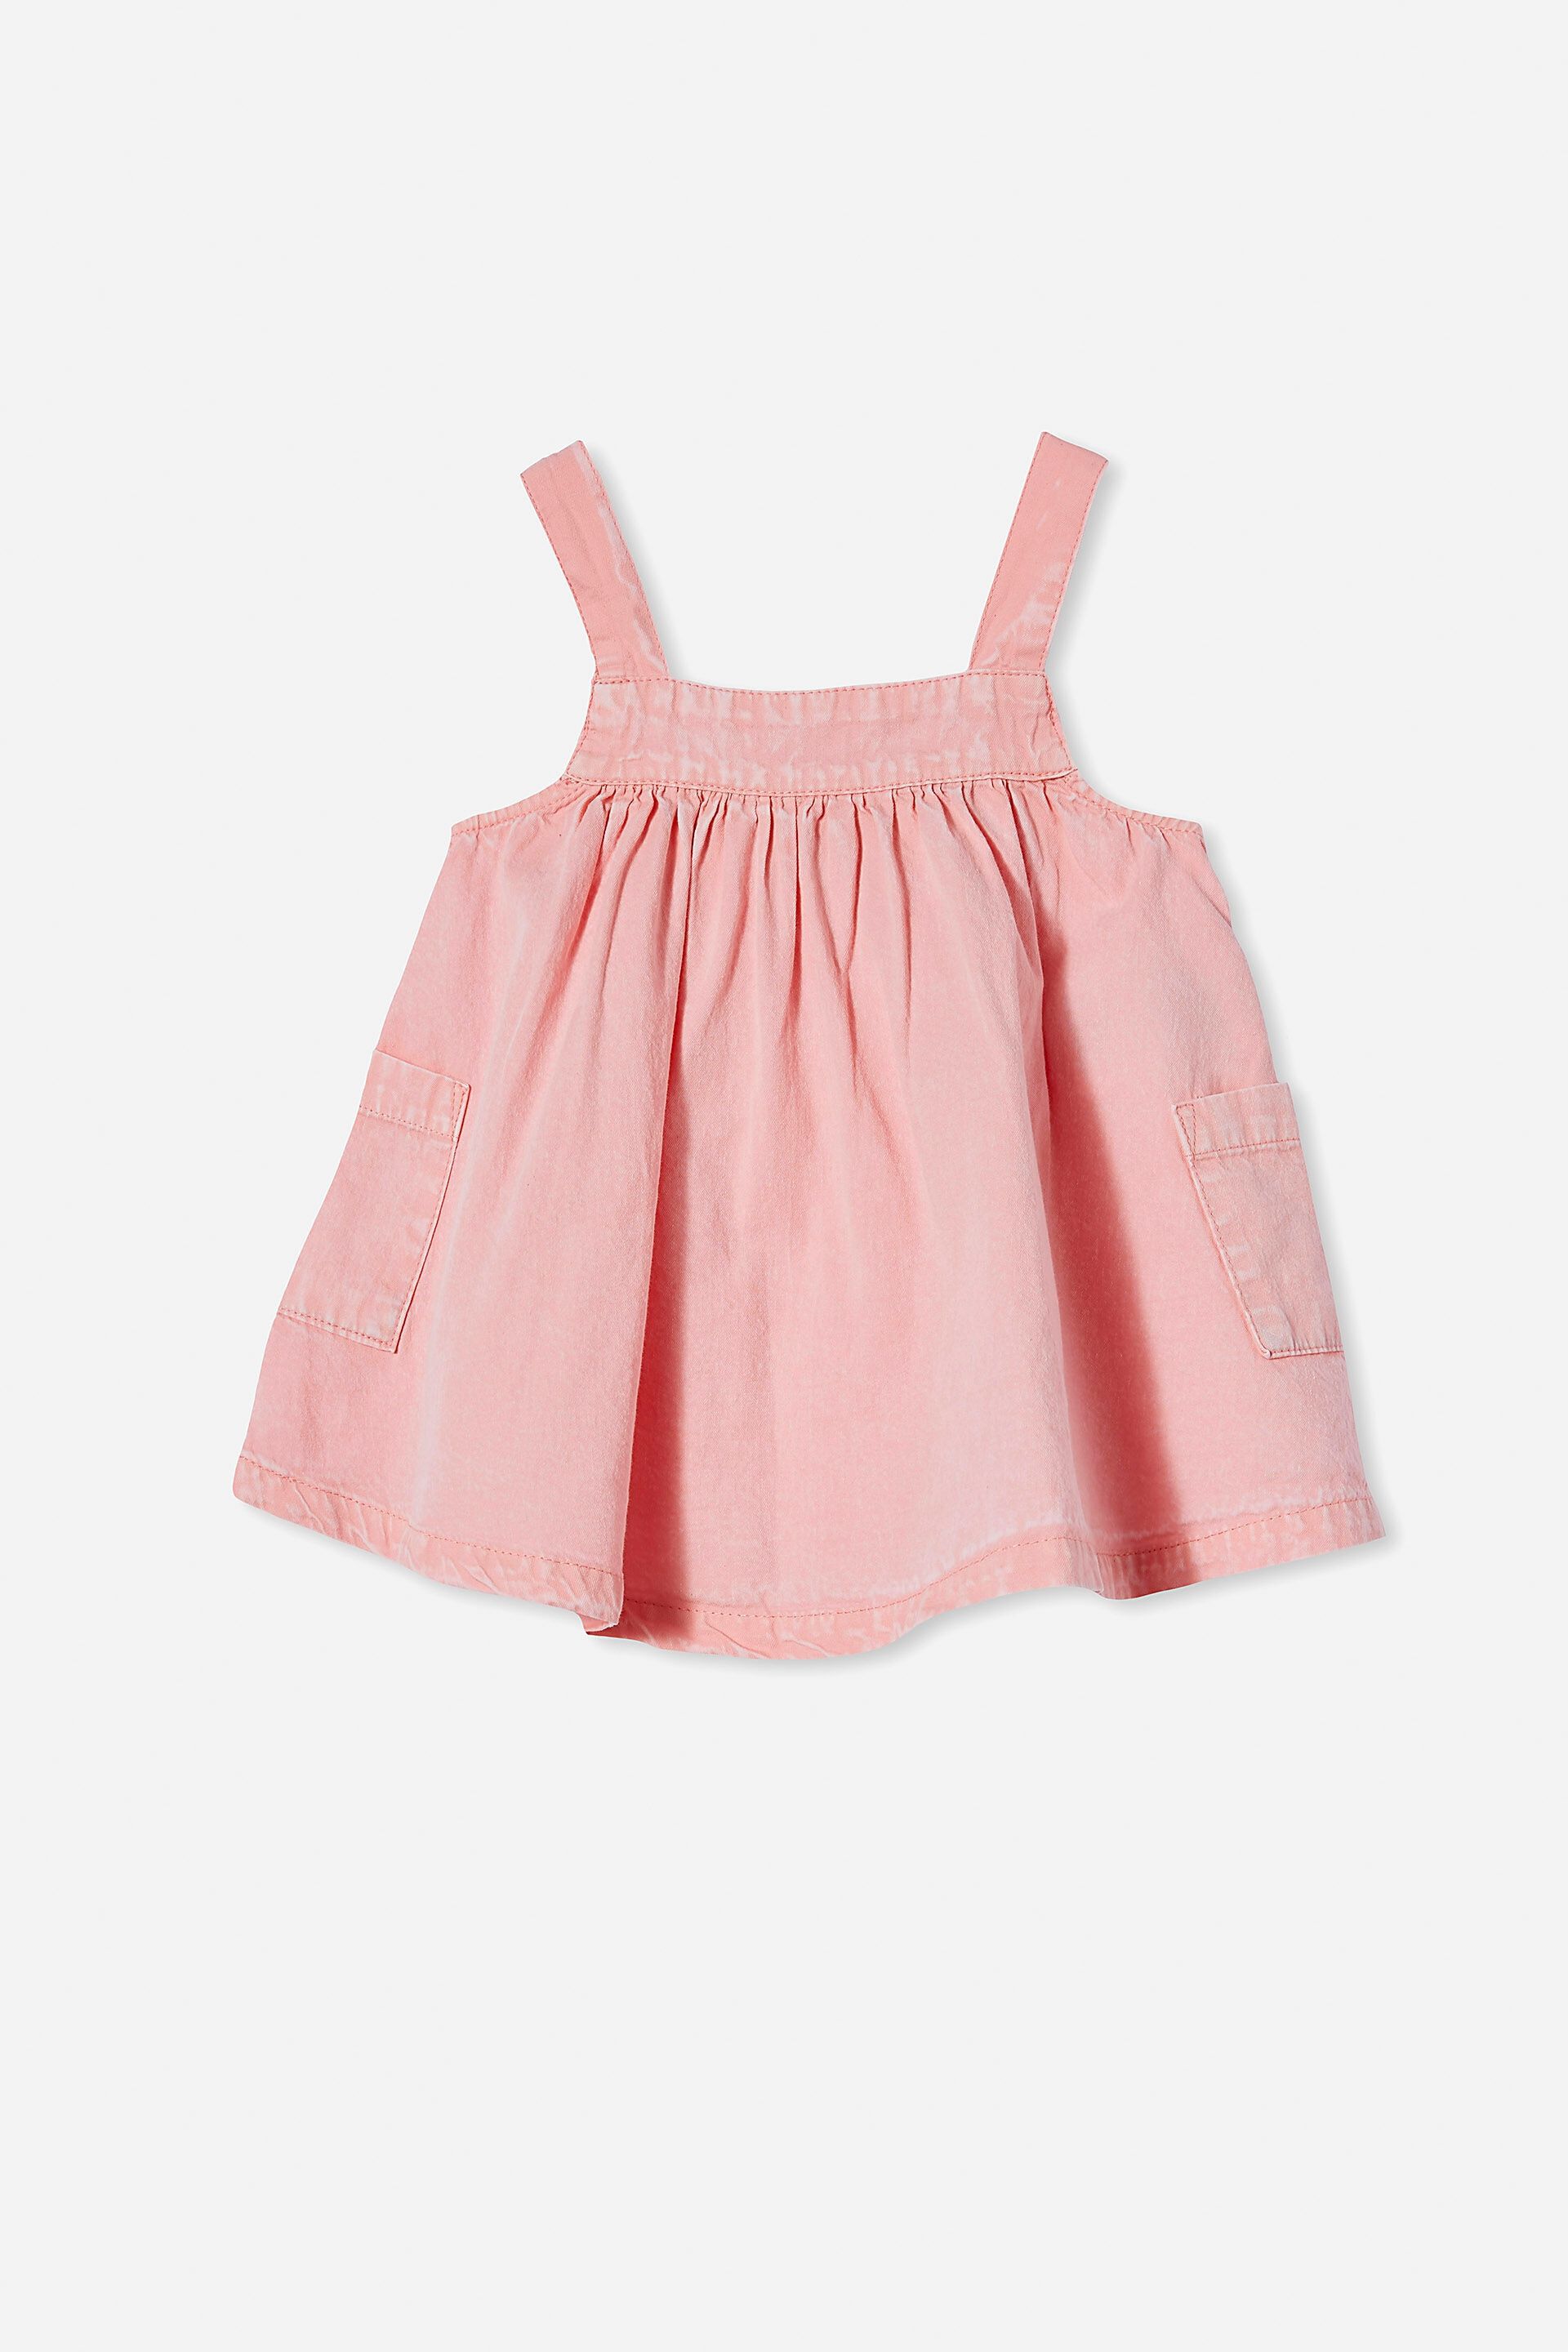 Baby Girl Dresses ☀ Skirts | Cotton On Kids